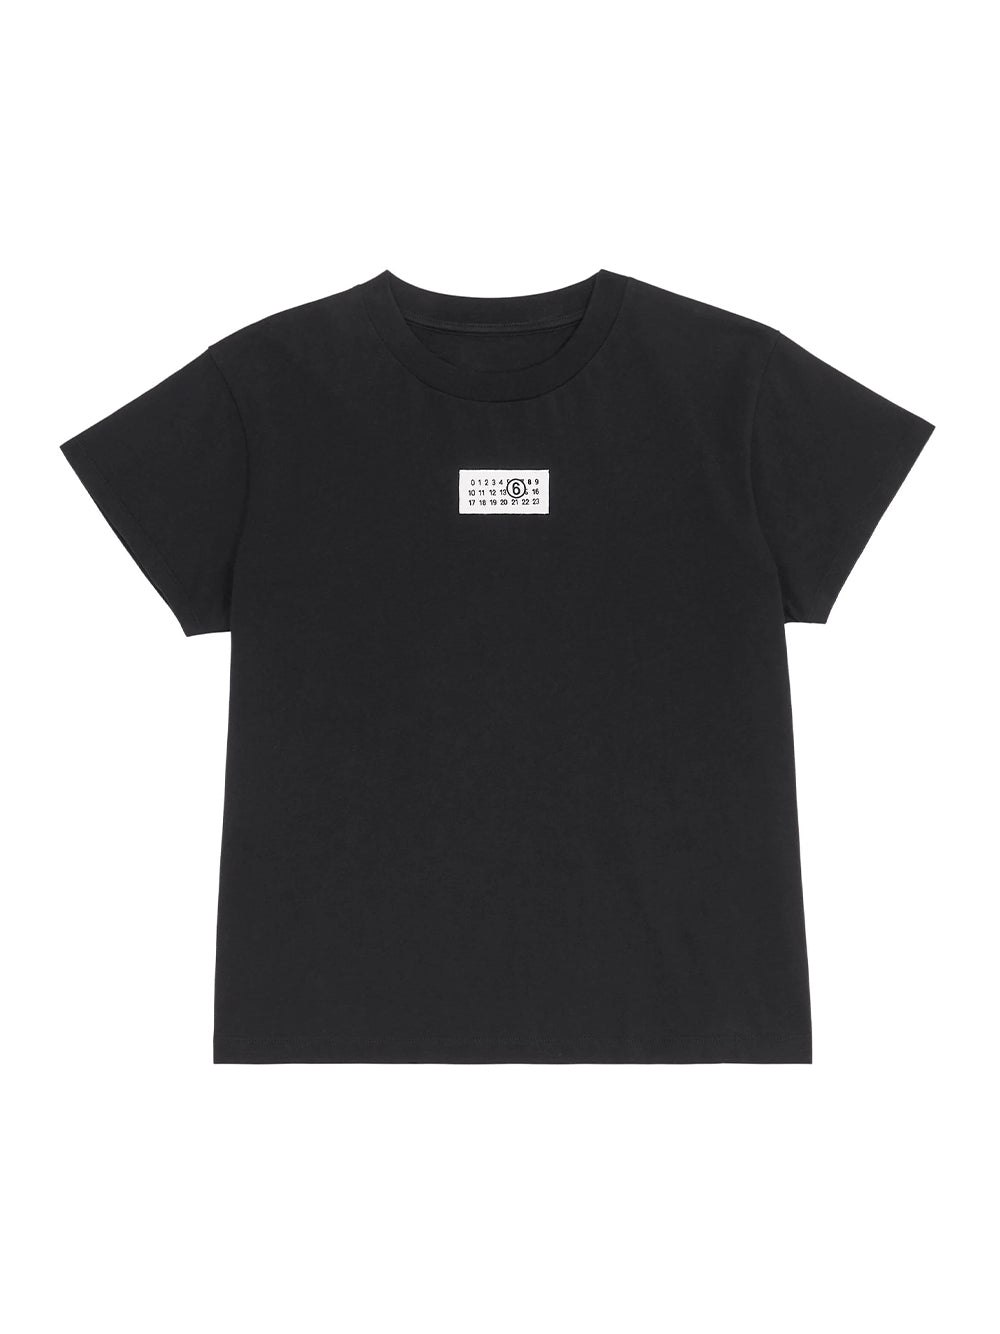 Cropped T-Shirt (Black)